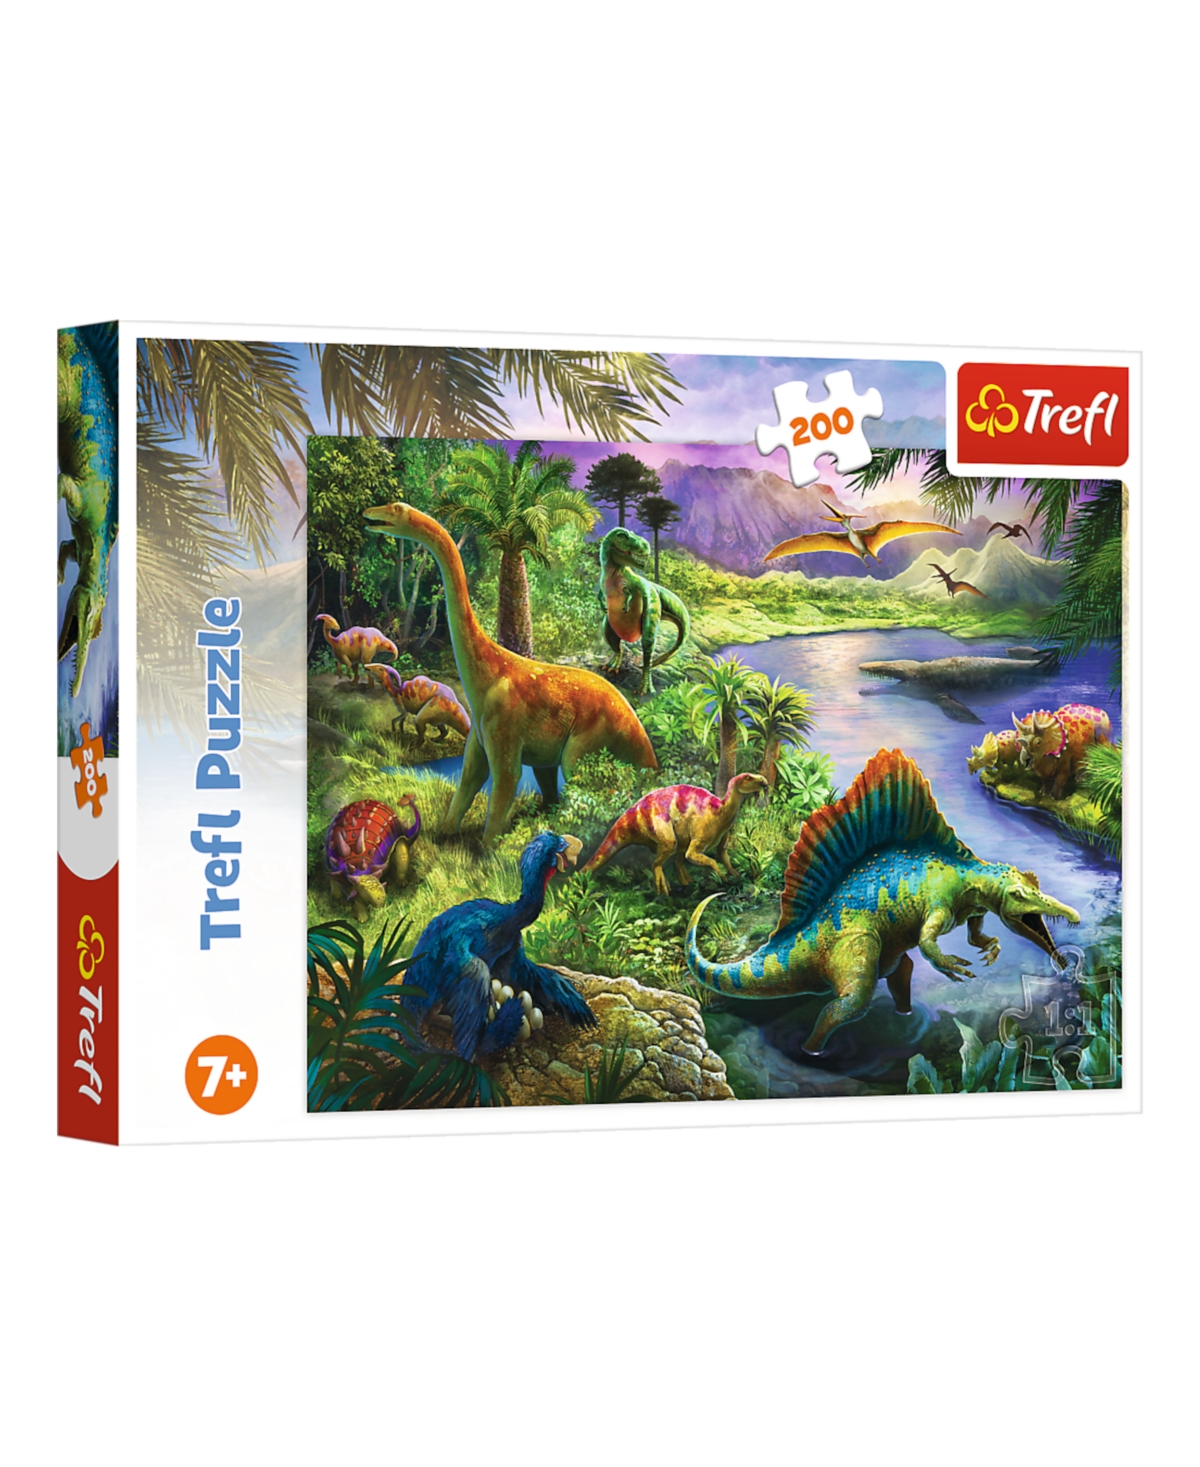 Trefl Red 200 Piece Kids Puzzle- Predatory Dinosaurs In Multi